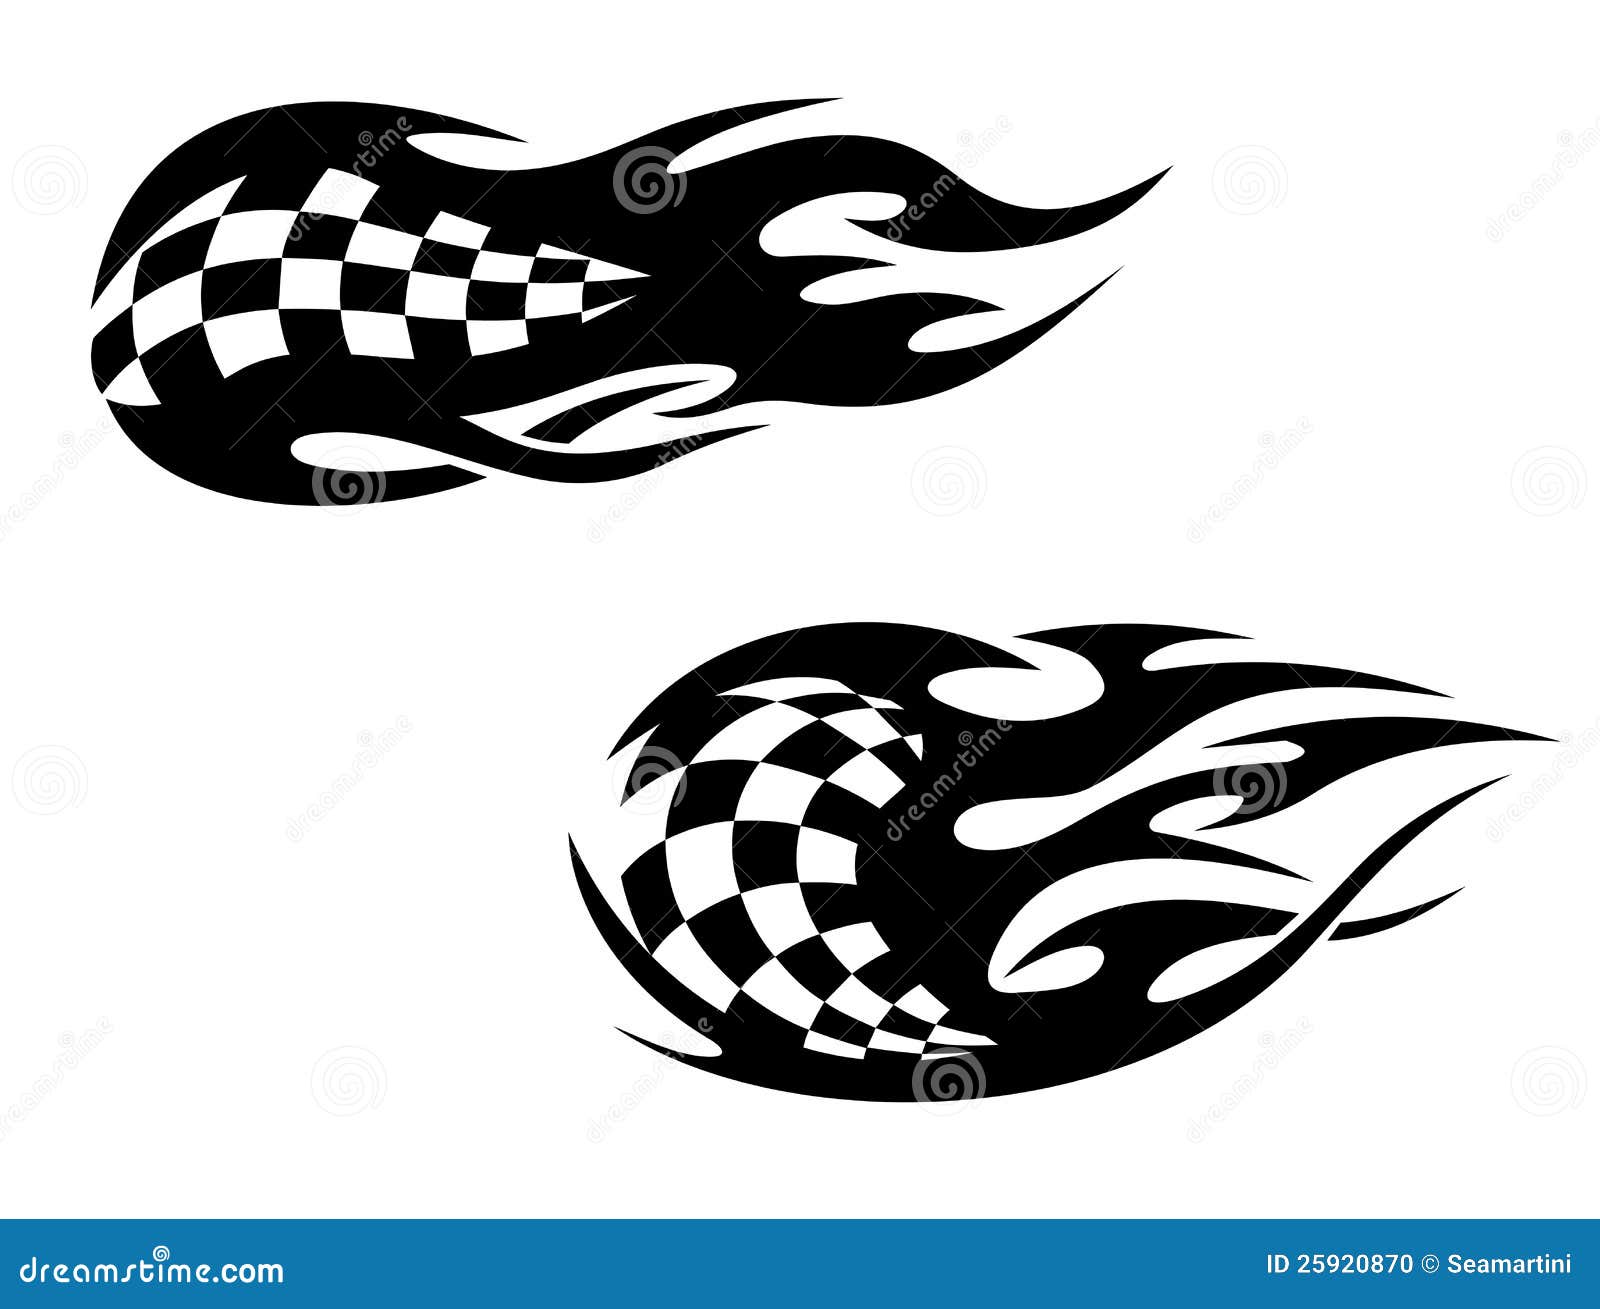 Racing Flag PNG Transparent Images Free Download  Vector Files  Pngtree